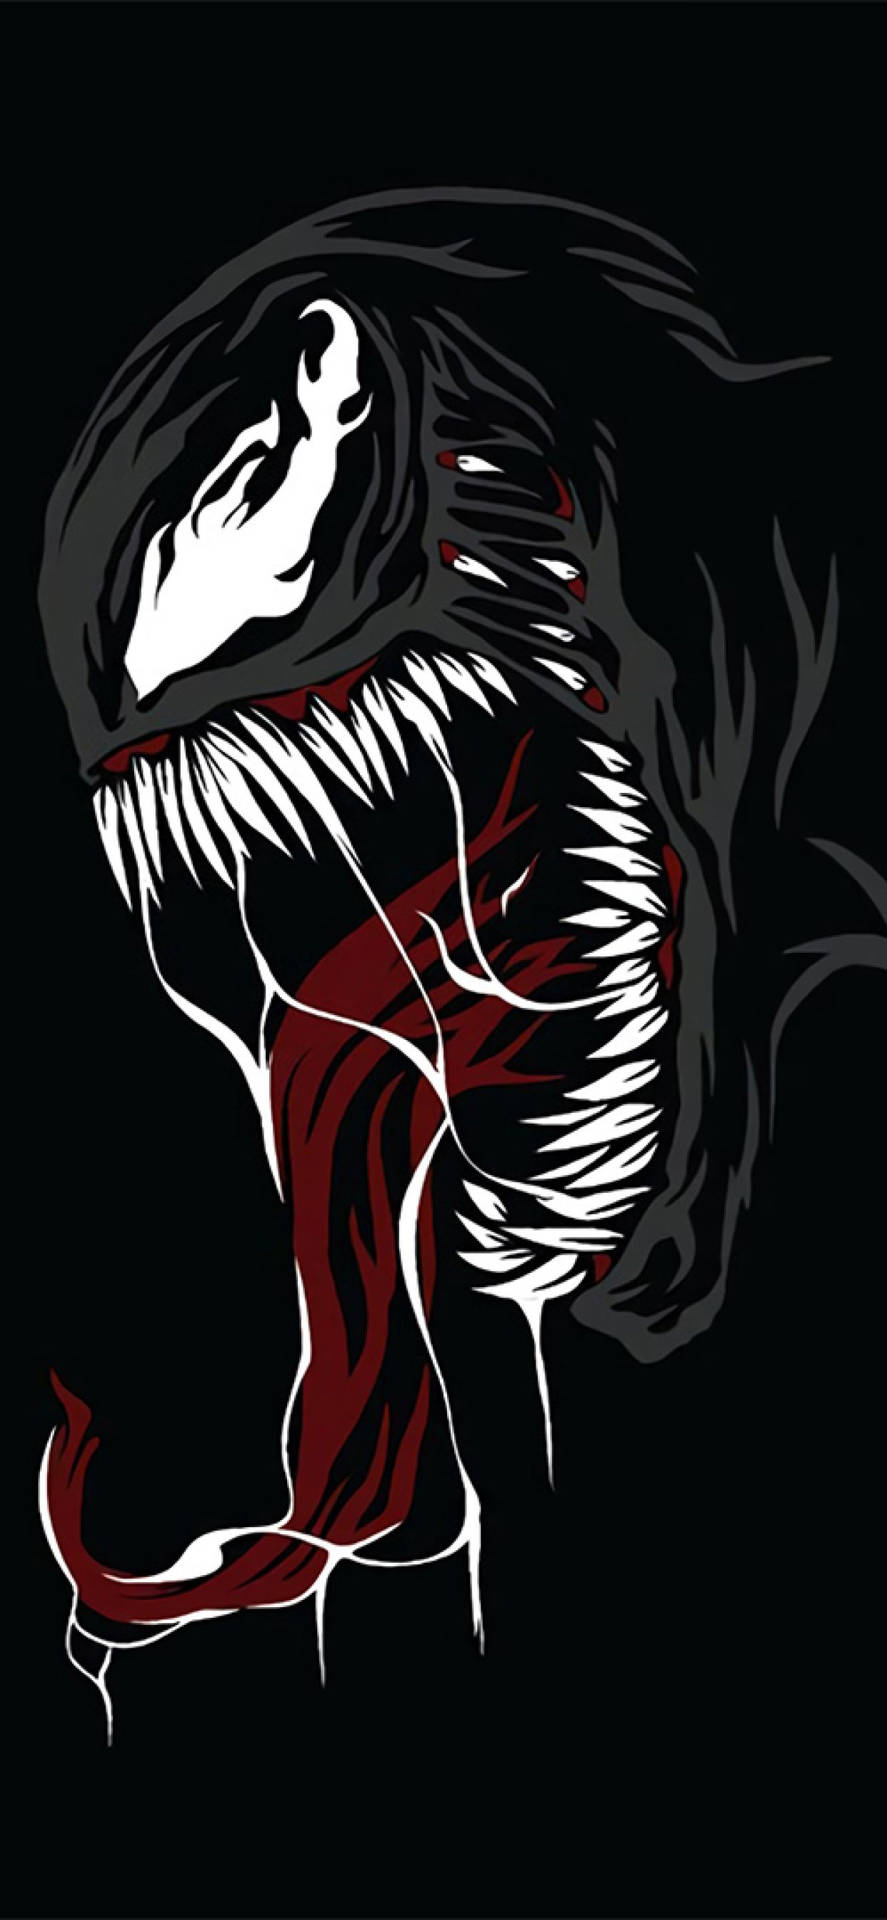 Caption: "Minimalist Venom Art Design for iPhone" Wallpaper